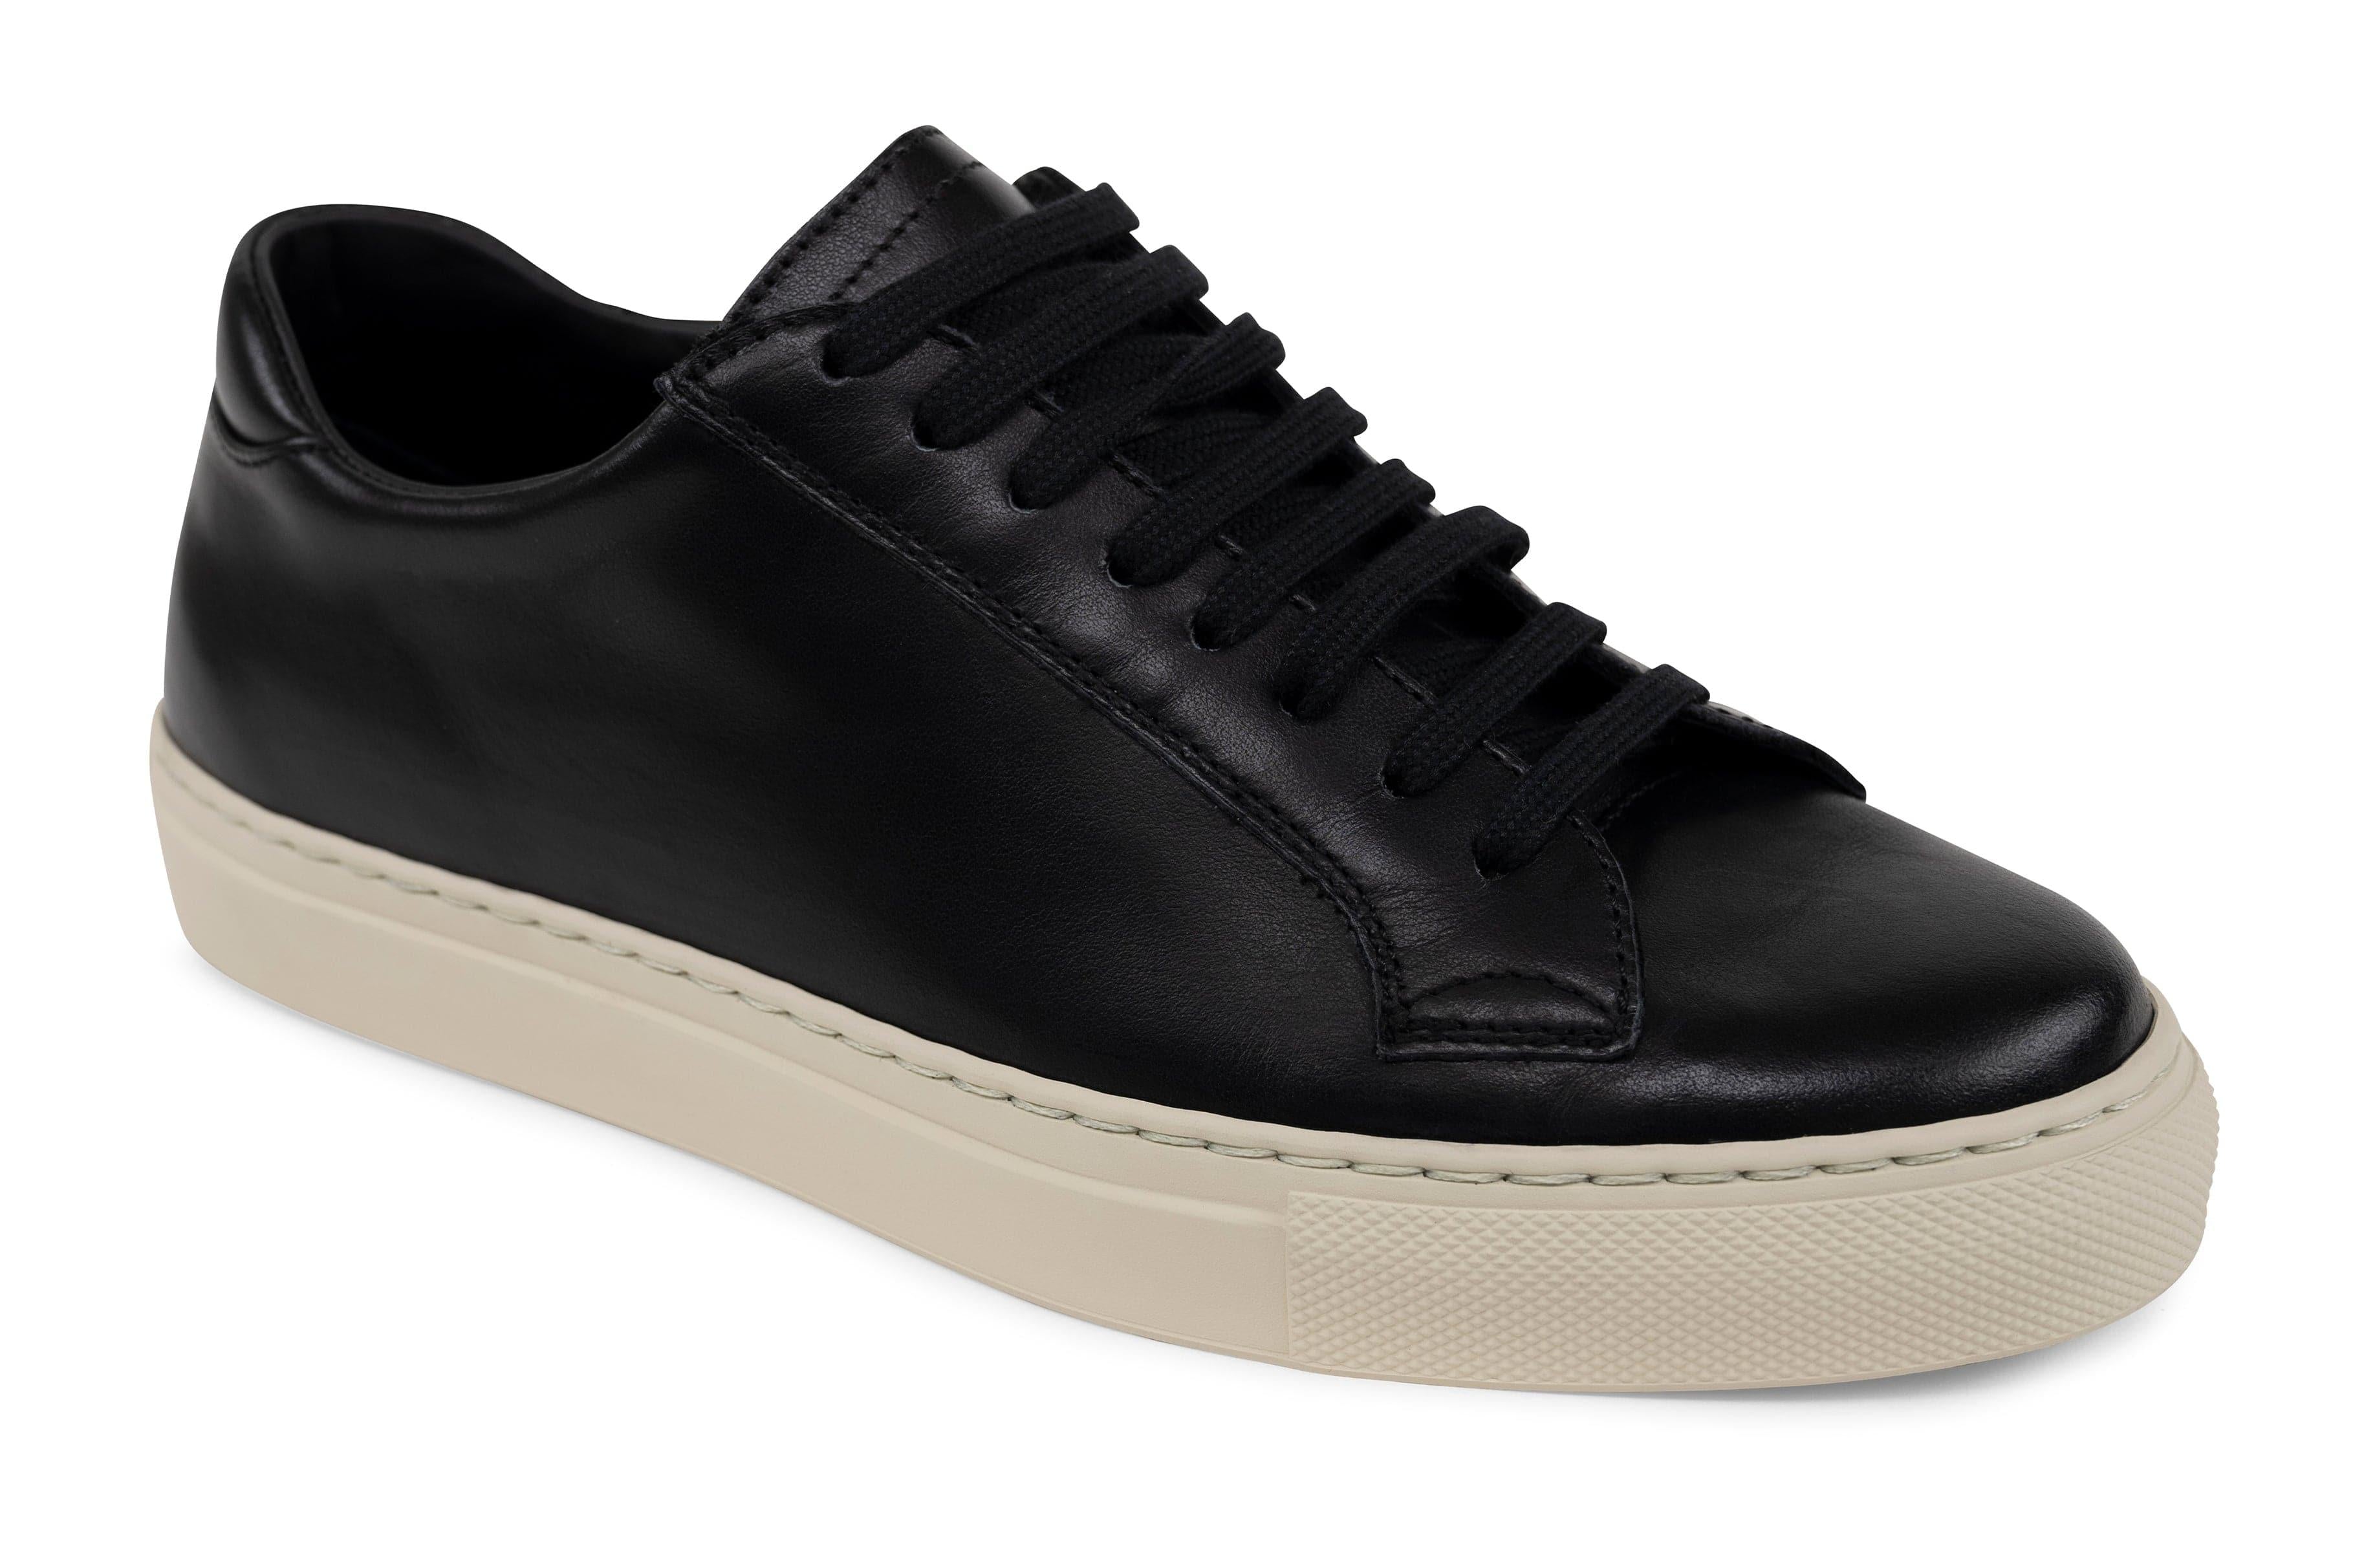 Bella - Italian Leather Sneakers - Italian Shoemakers